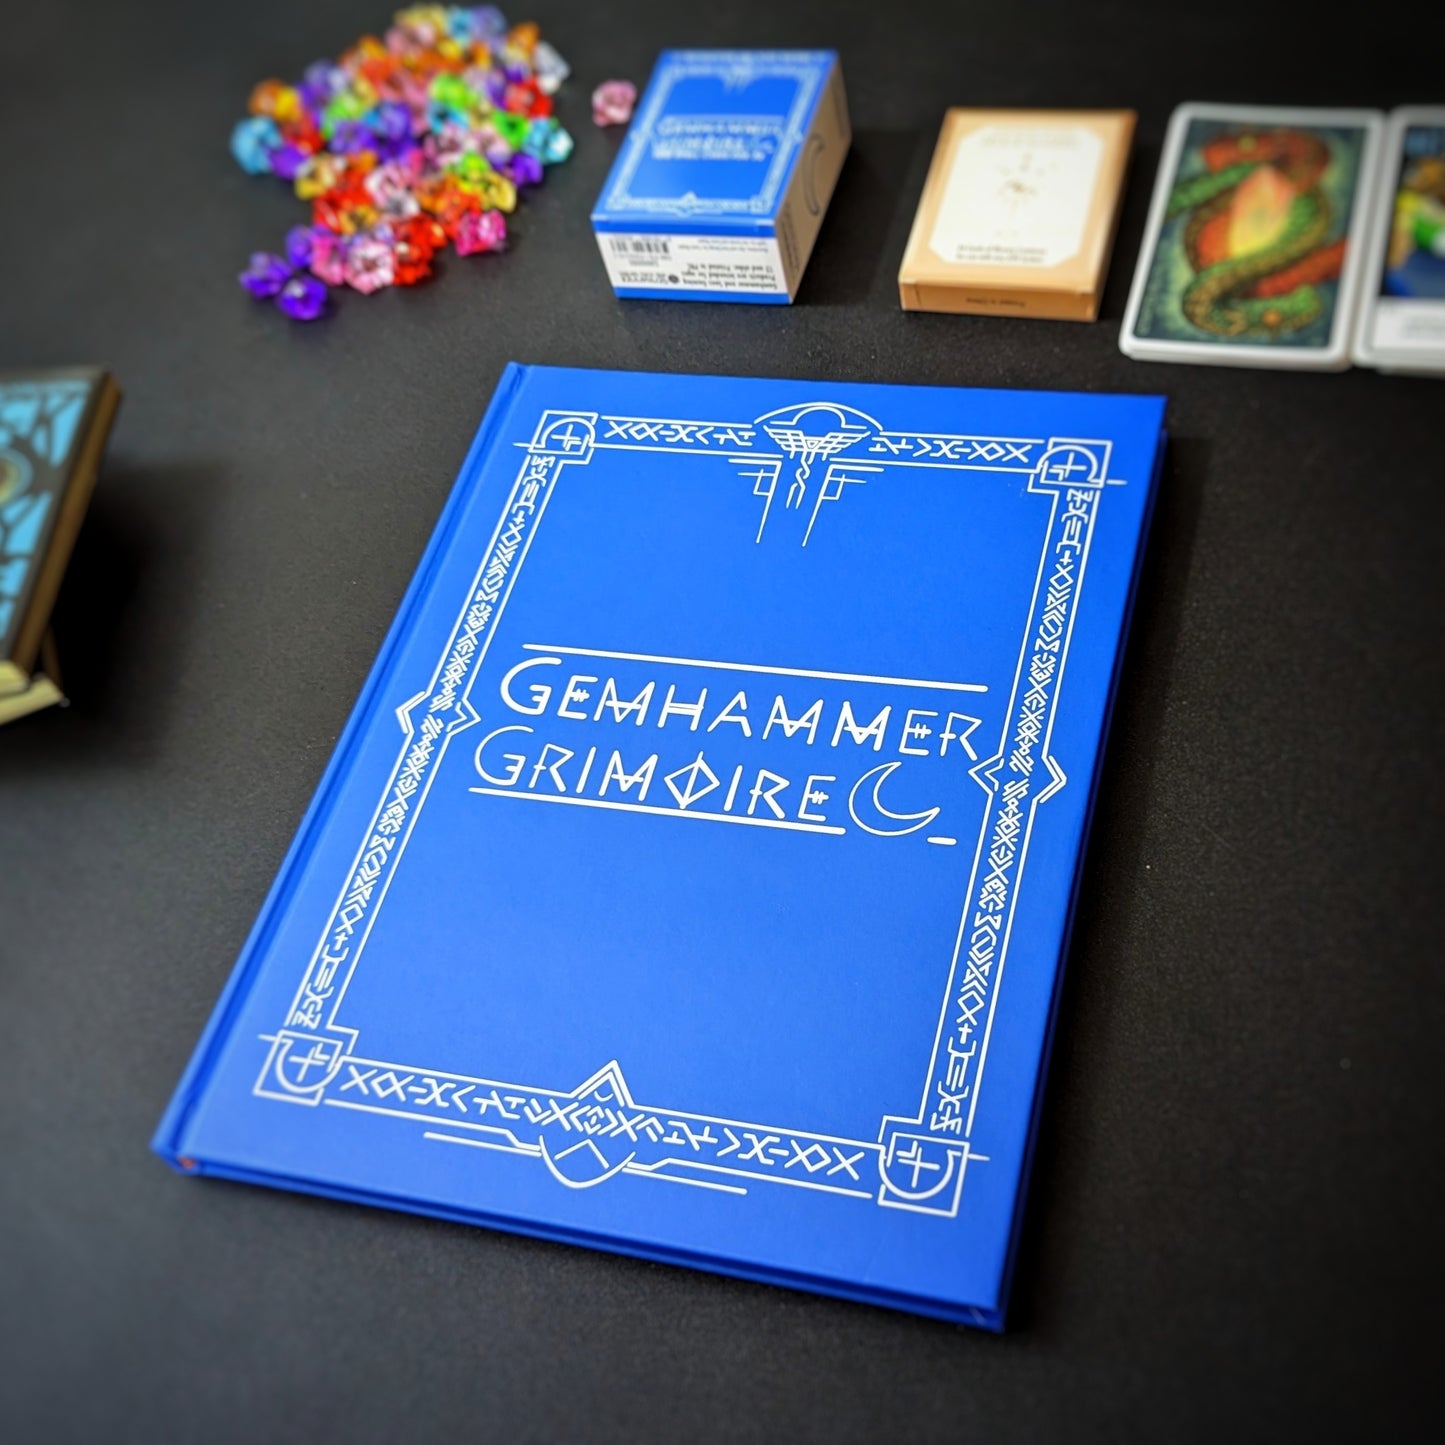 The Gemhammer Grimoire